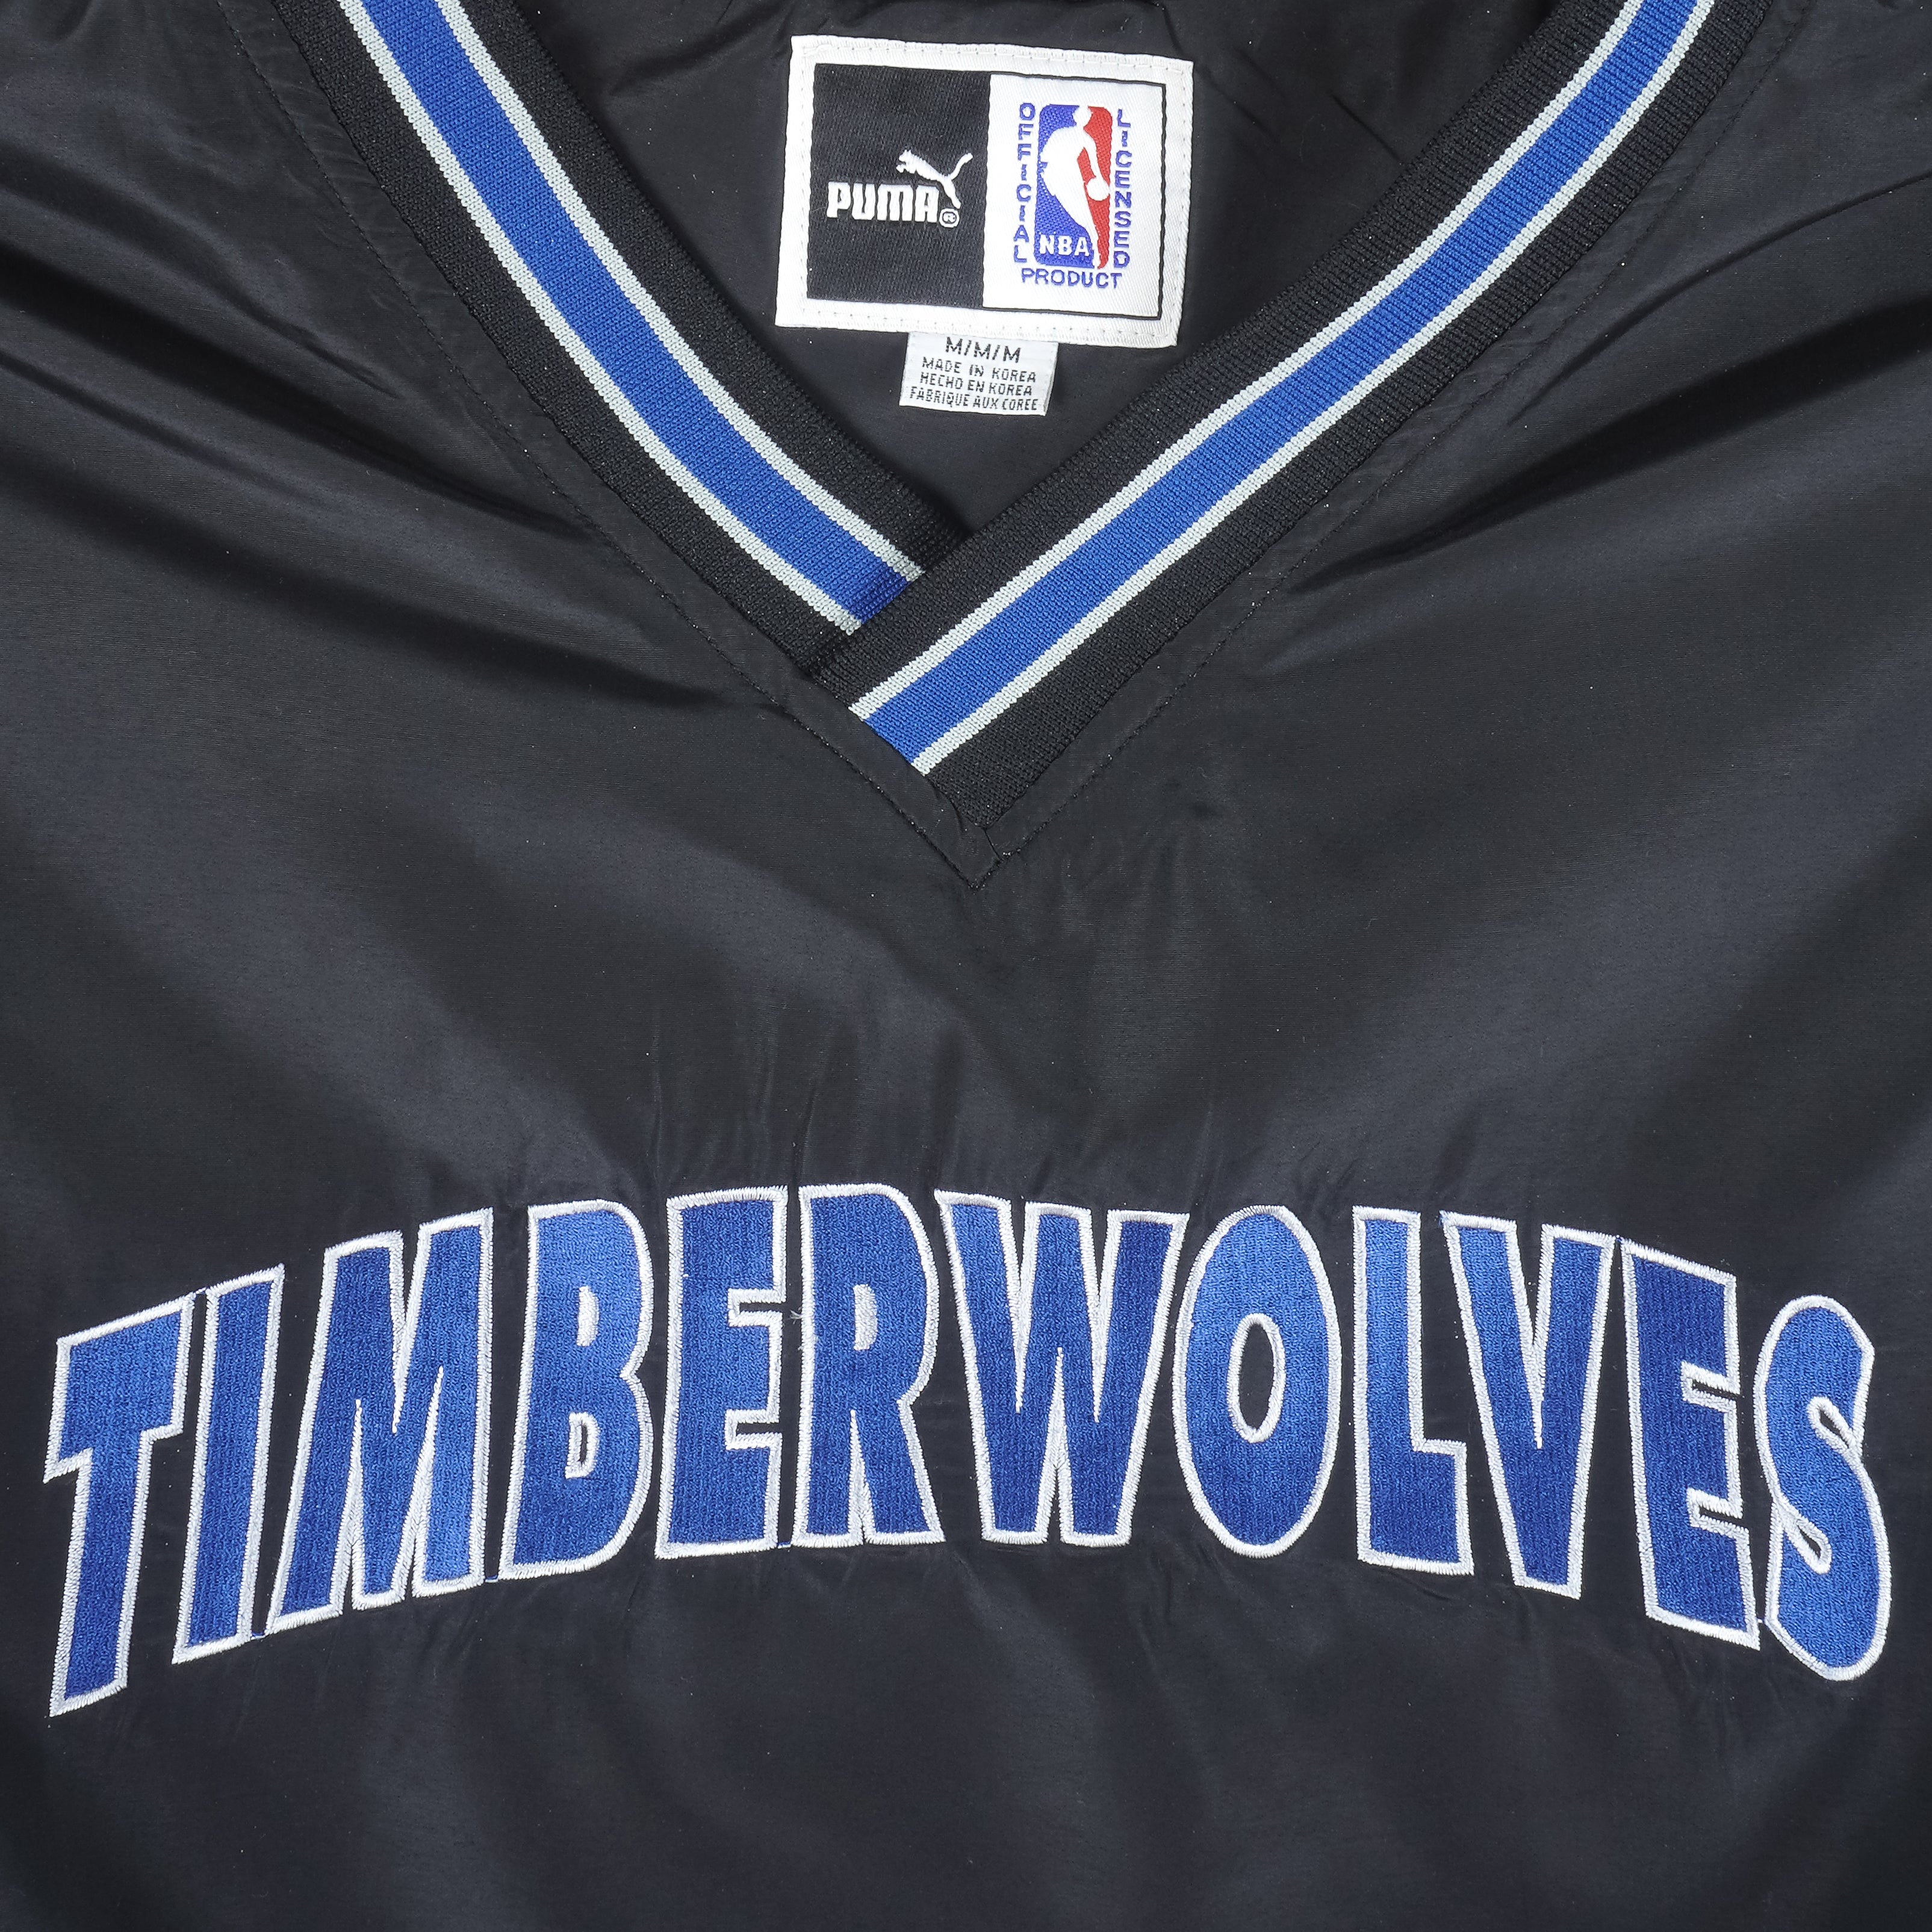 Official Minnesota Timberwolves Apparel, Timberwolves Gear